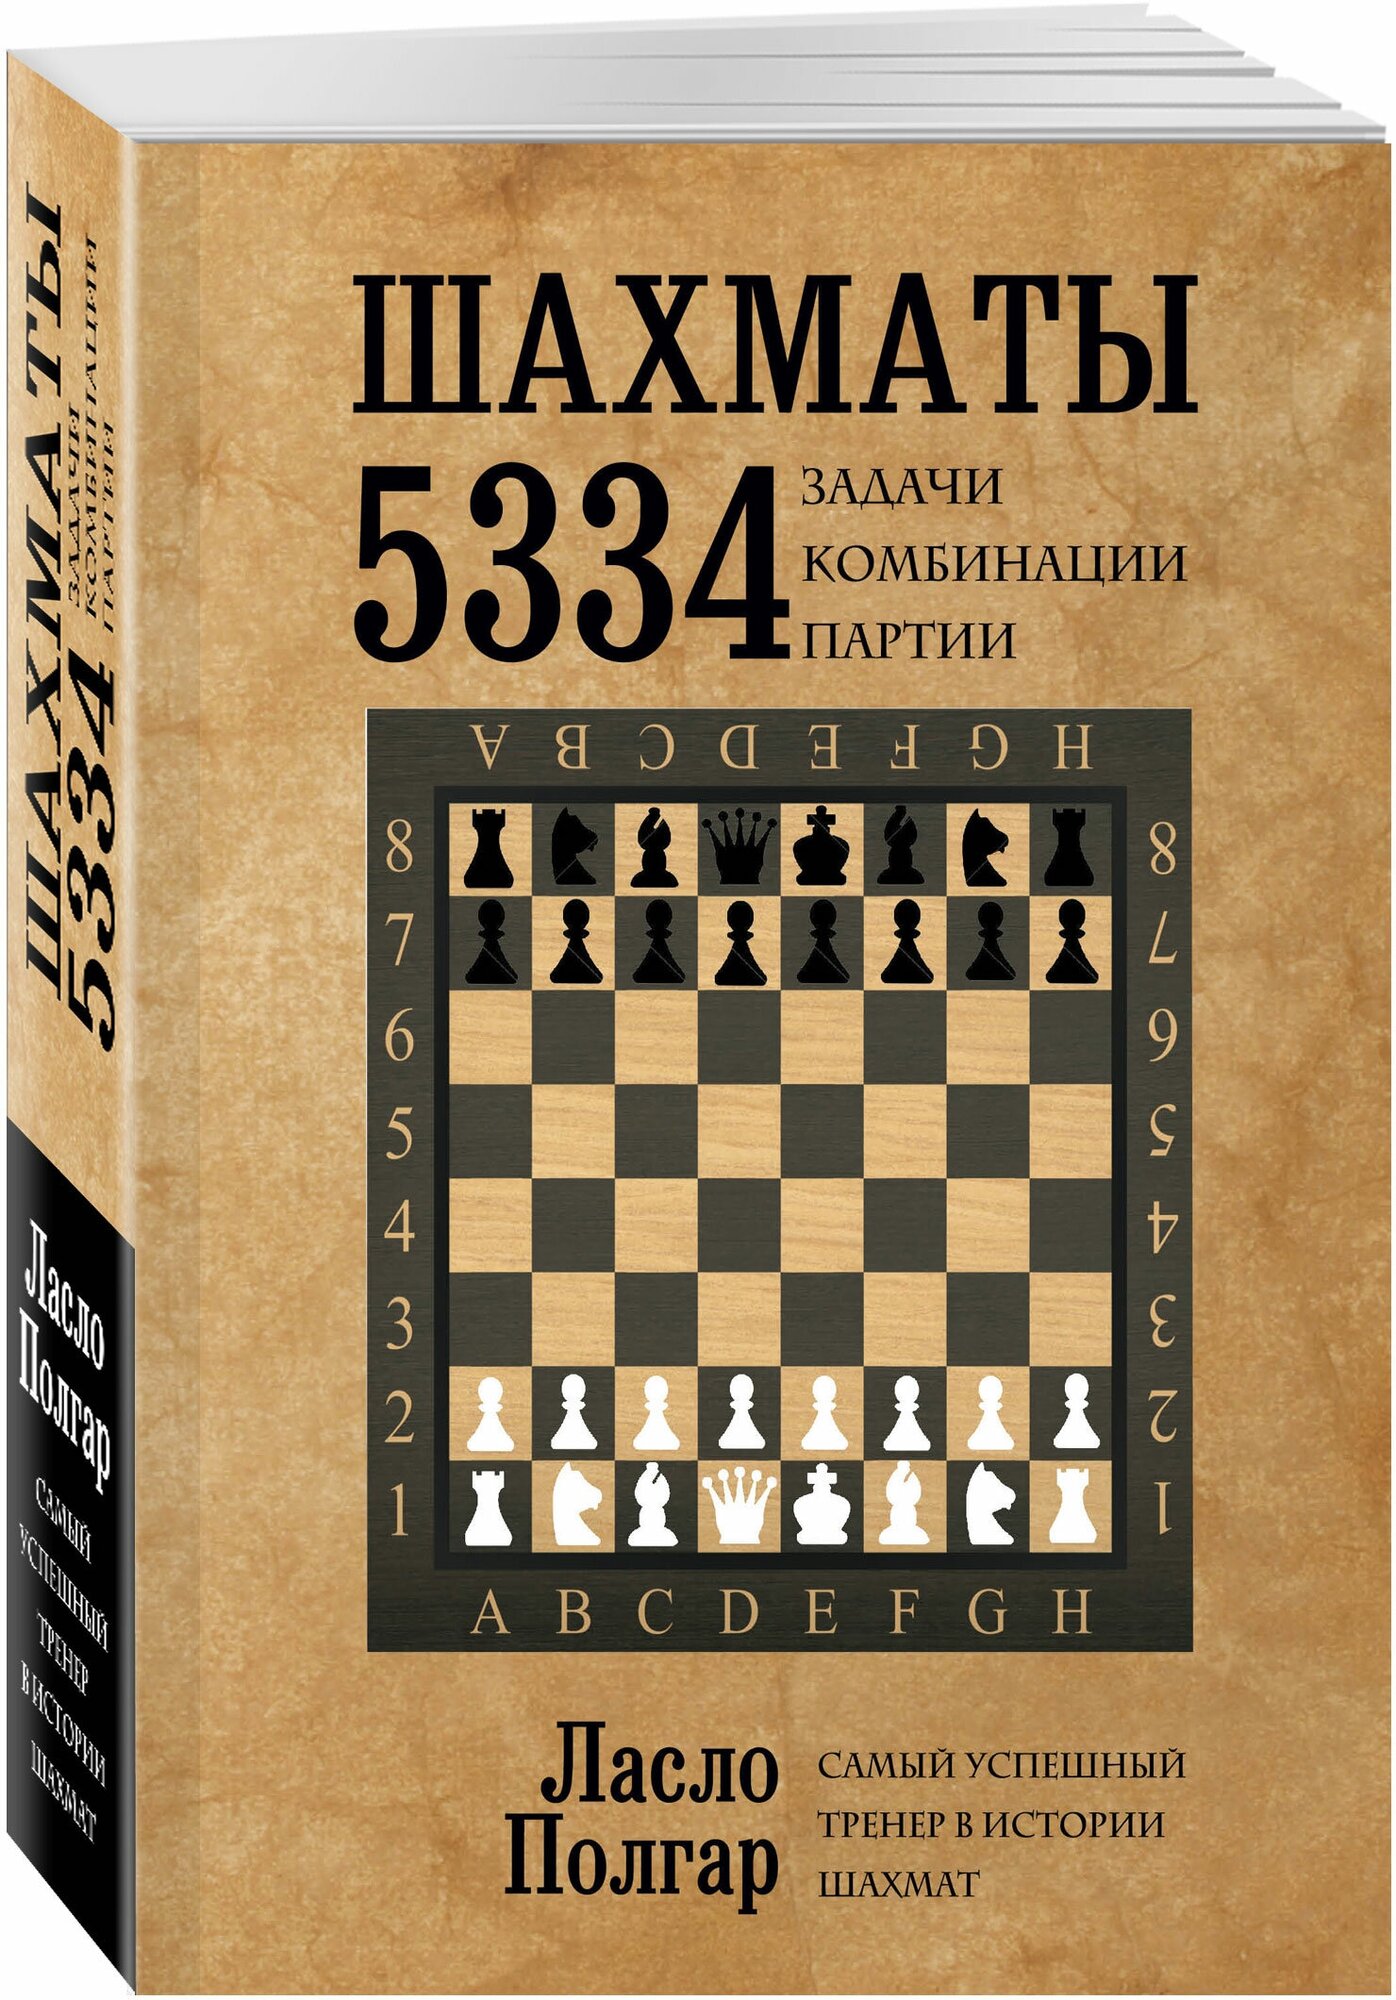 Шахматы. 5334 задачи, комбинации и партии - фото №4